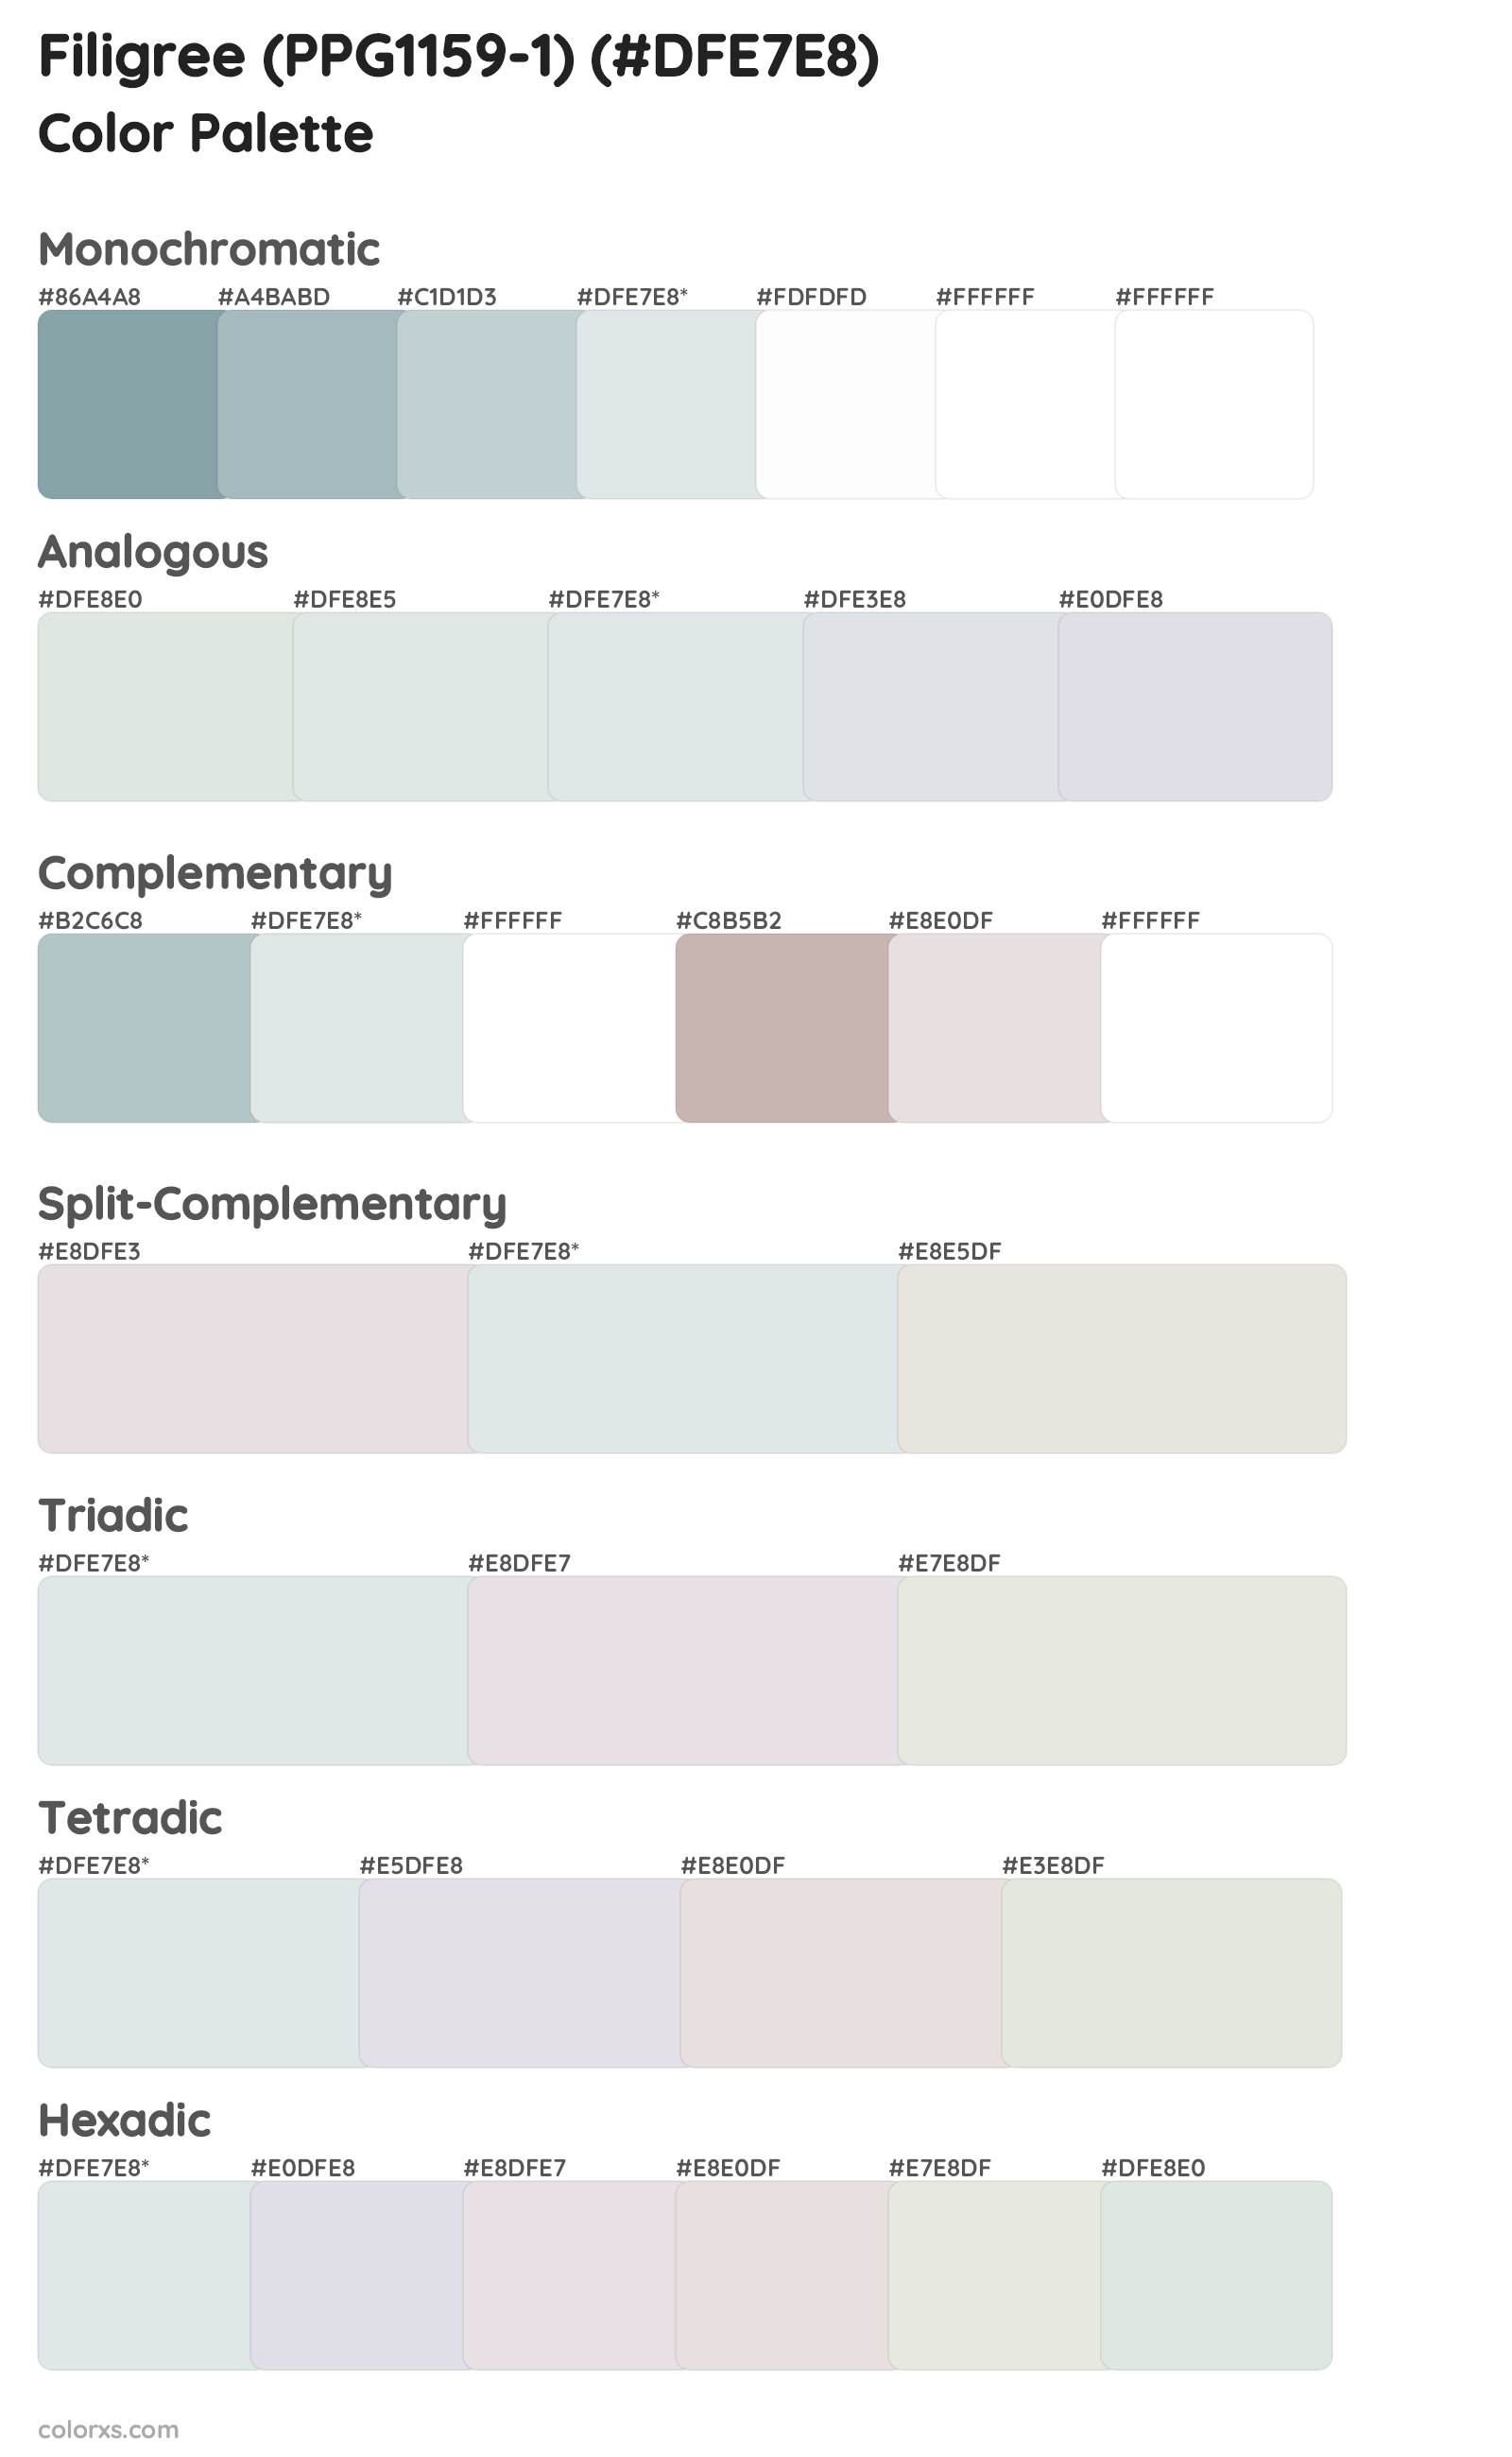 Filigree (PPG1159-1) Color Scheme Palettes